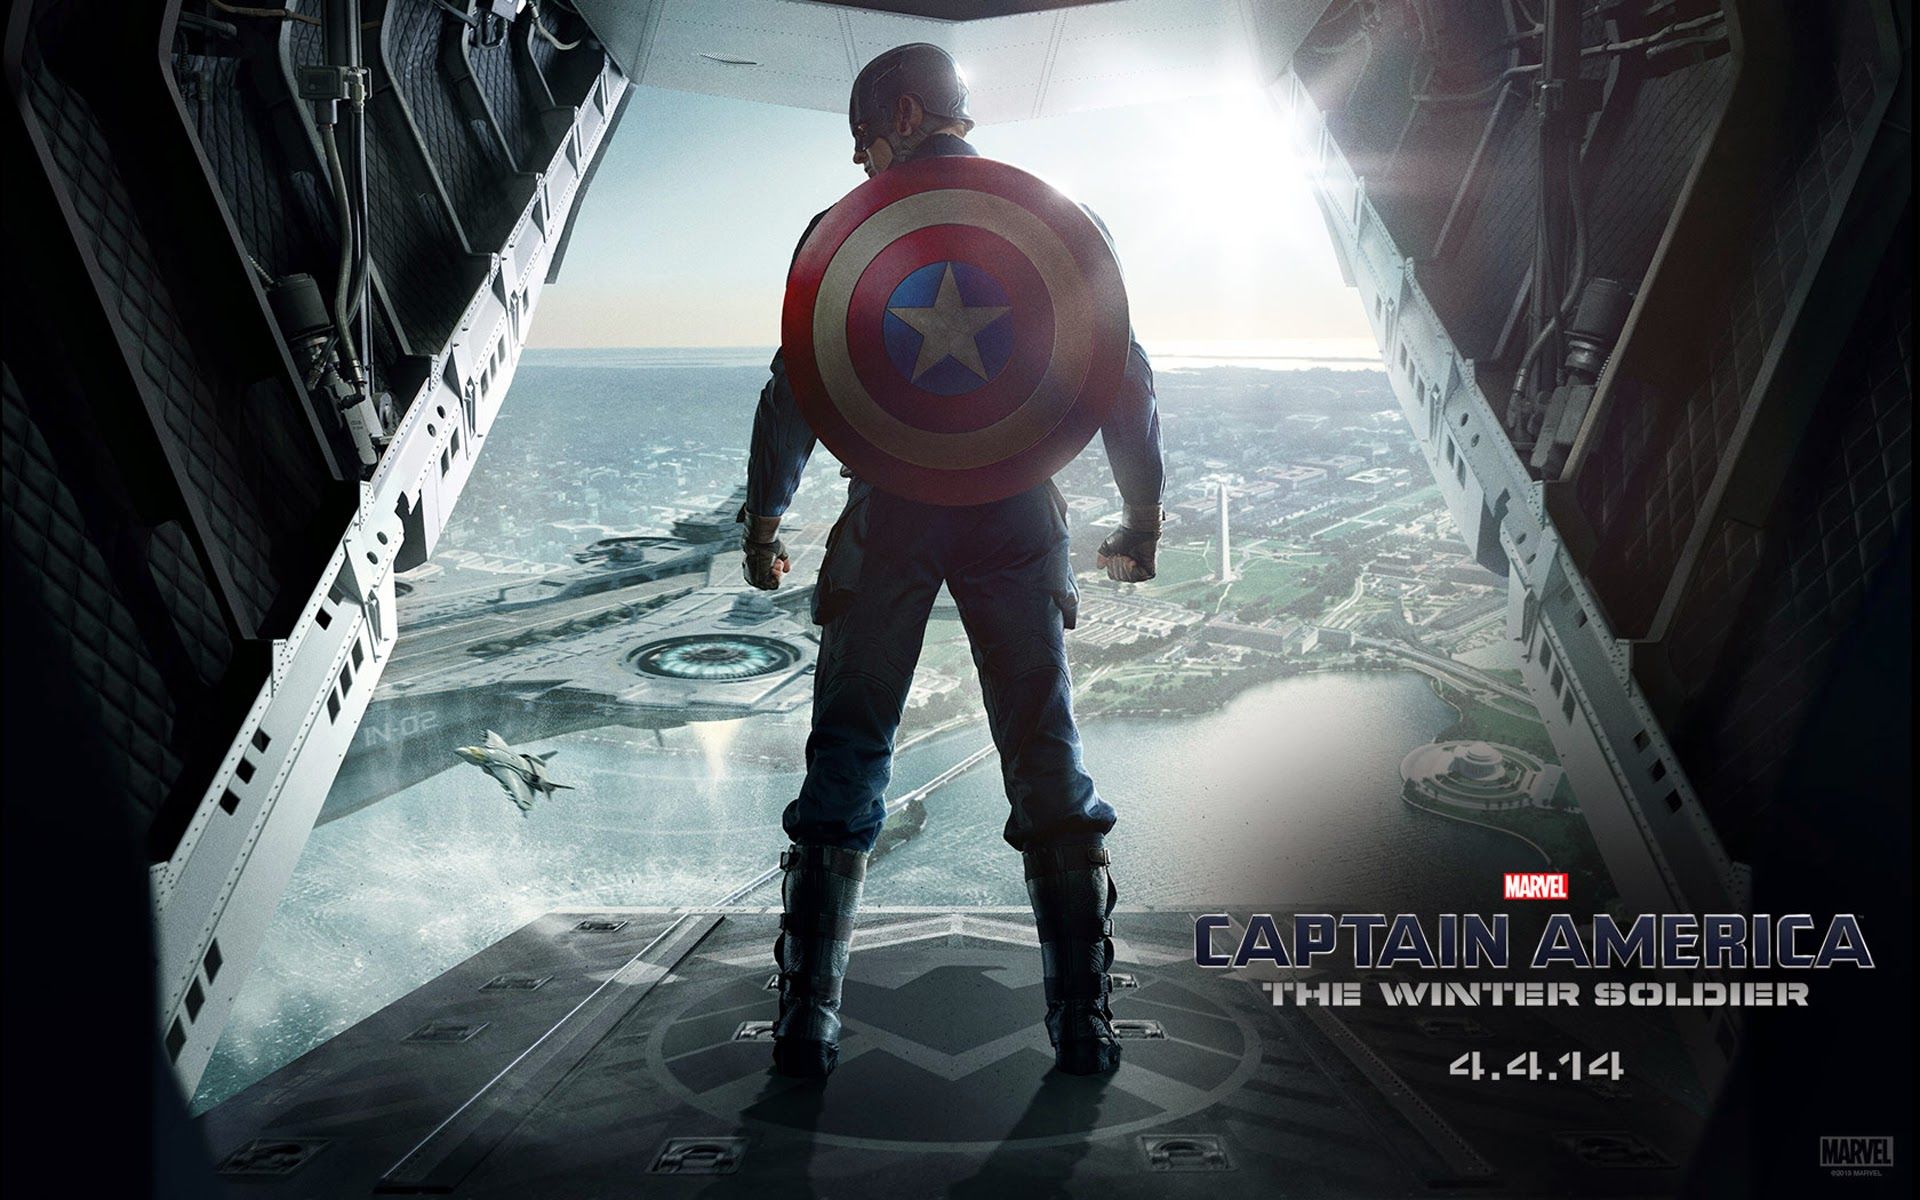 Captain America Wallpaper: captain america 2 the winter soldier star shield 2014 marvel movie hd